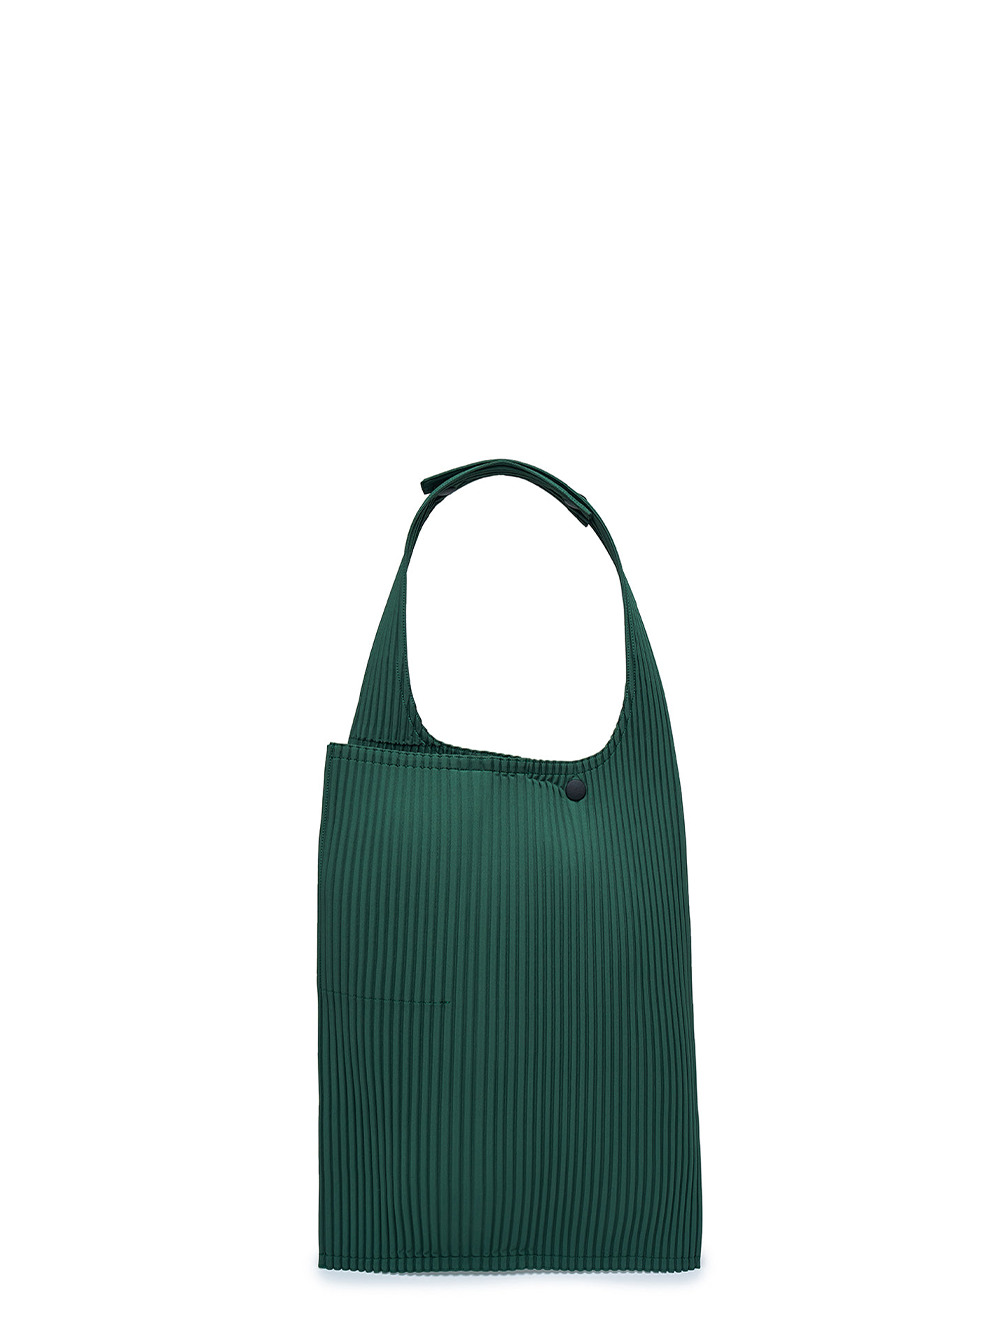 PETAL BAG Hand Bag - 1